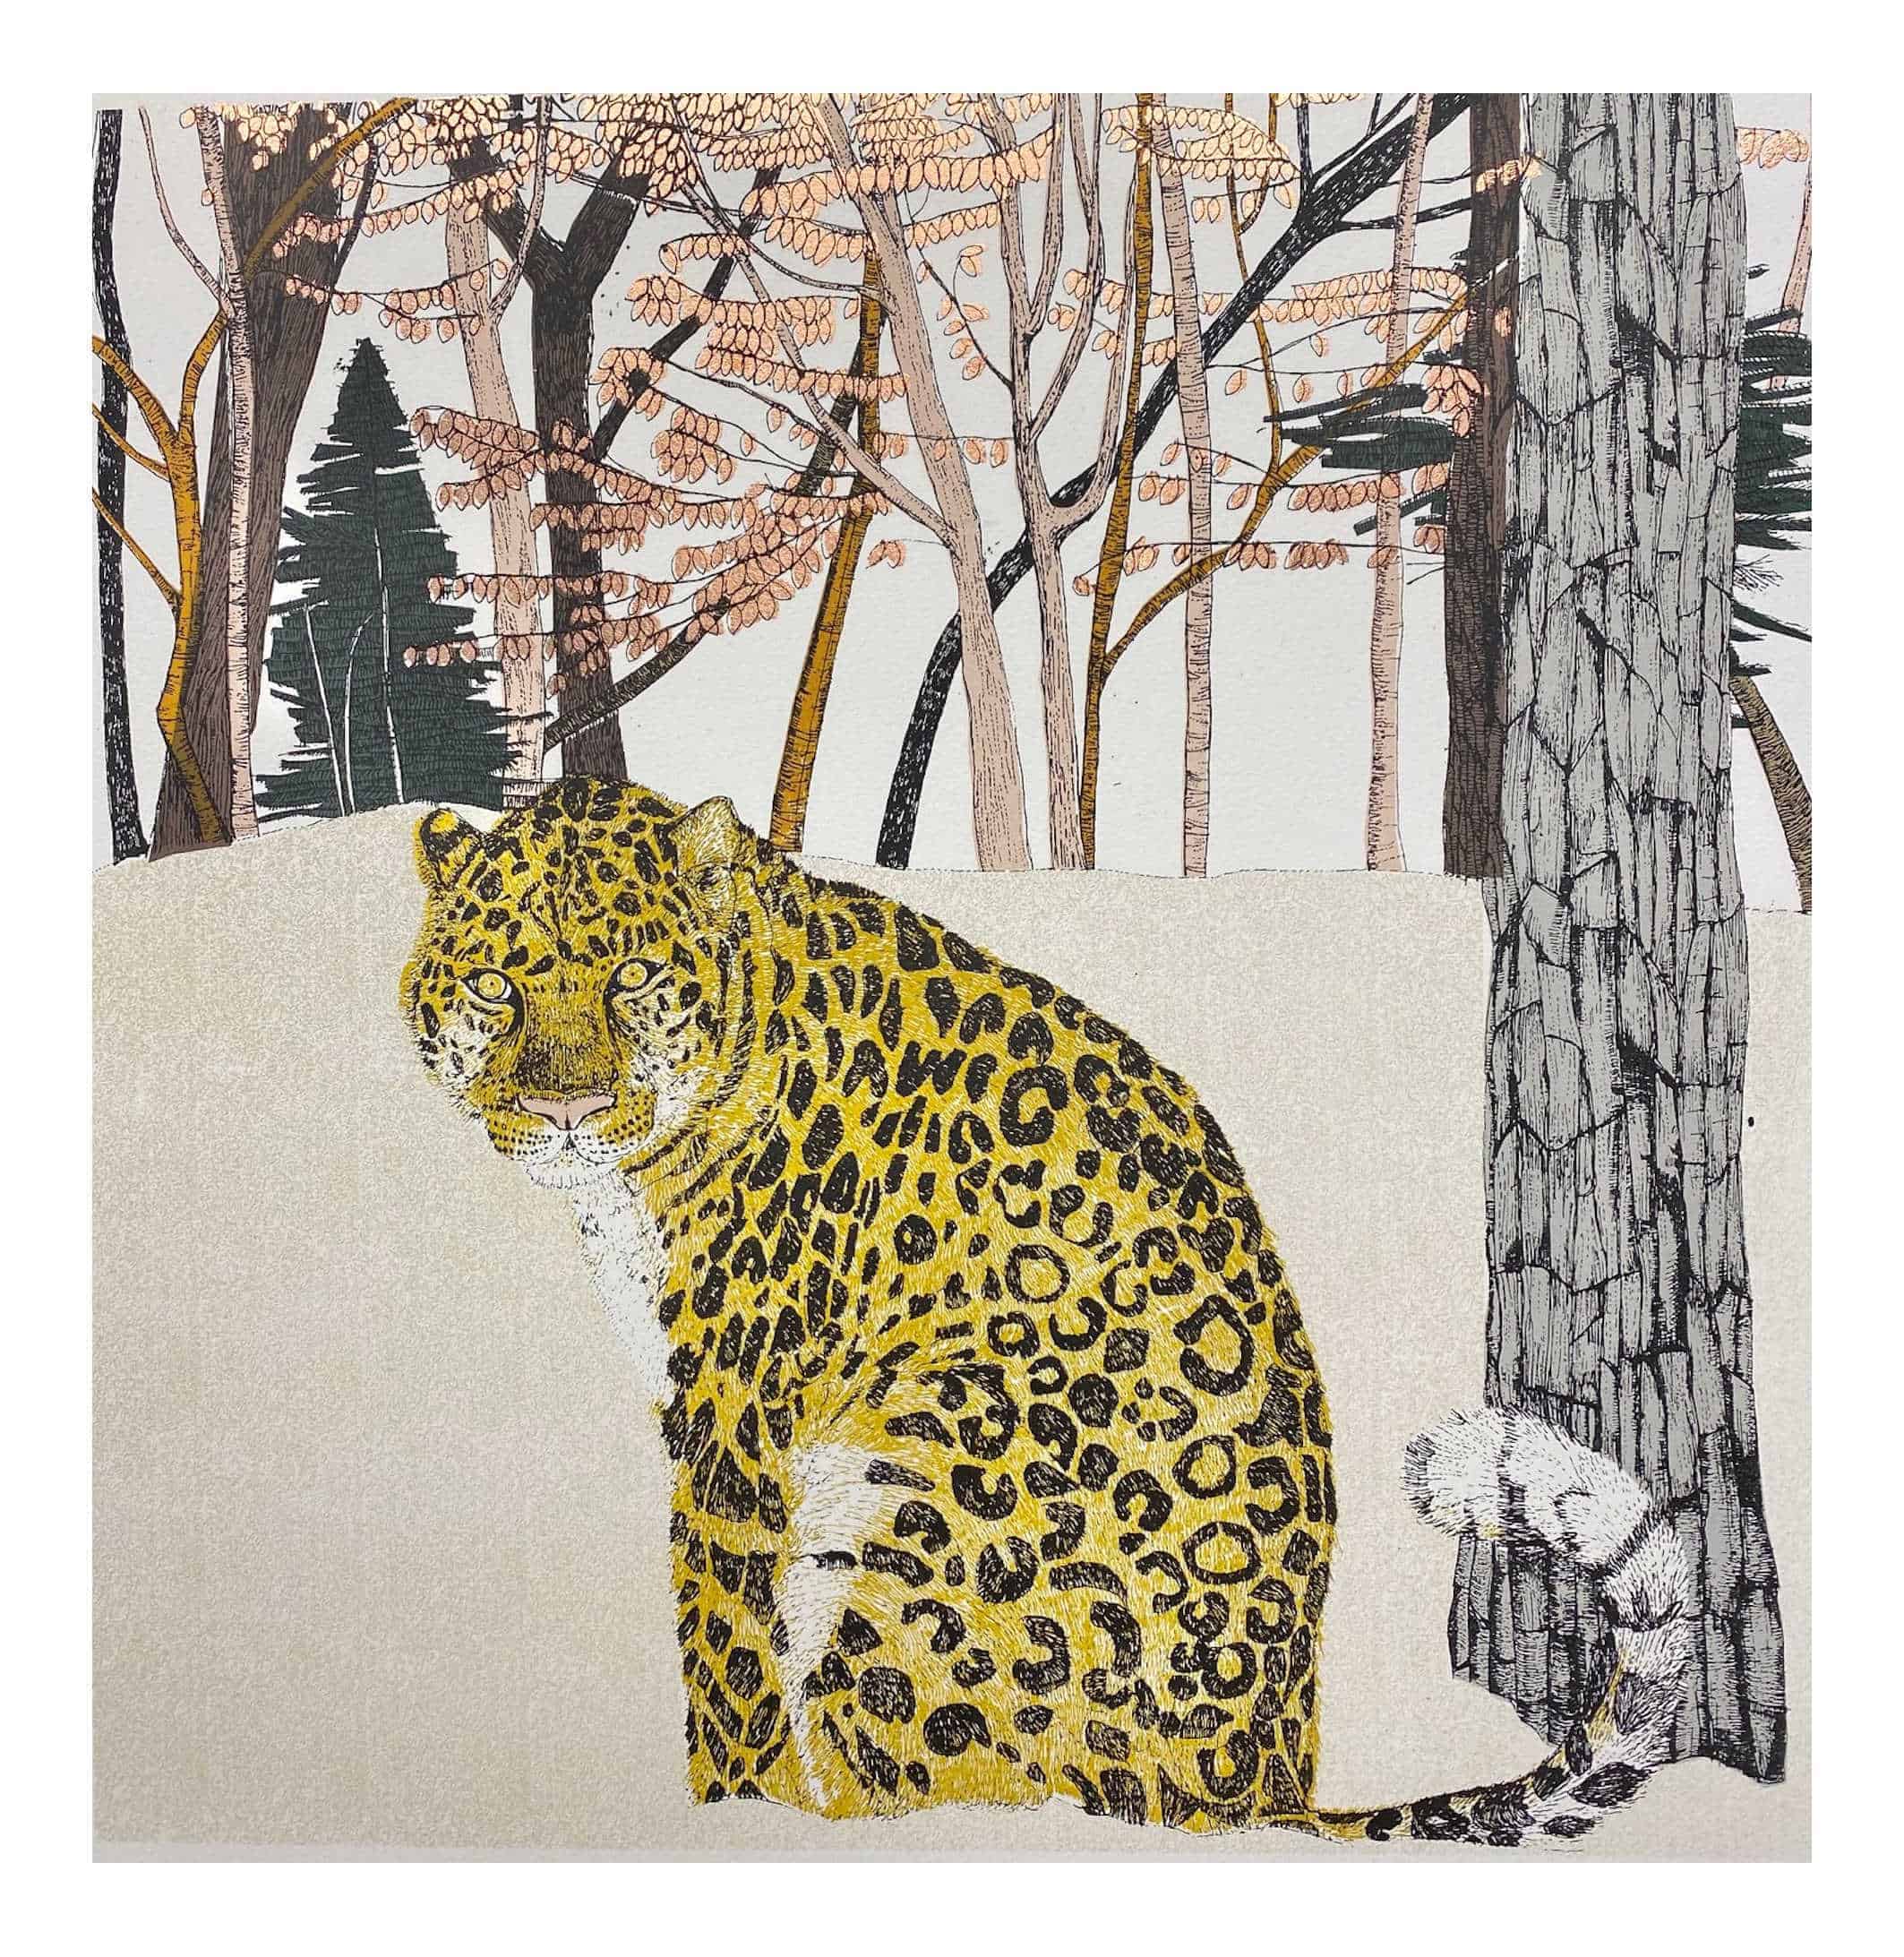 Amur Leopard Fabric, Wallpaper and Home Decor